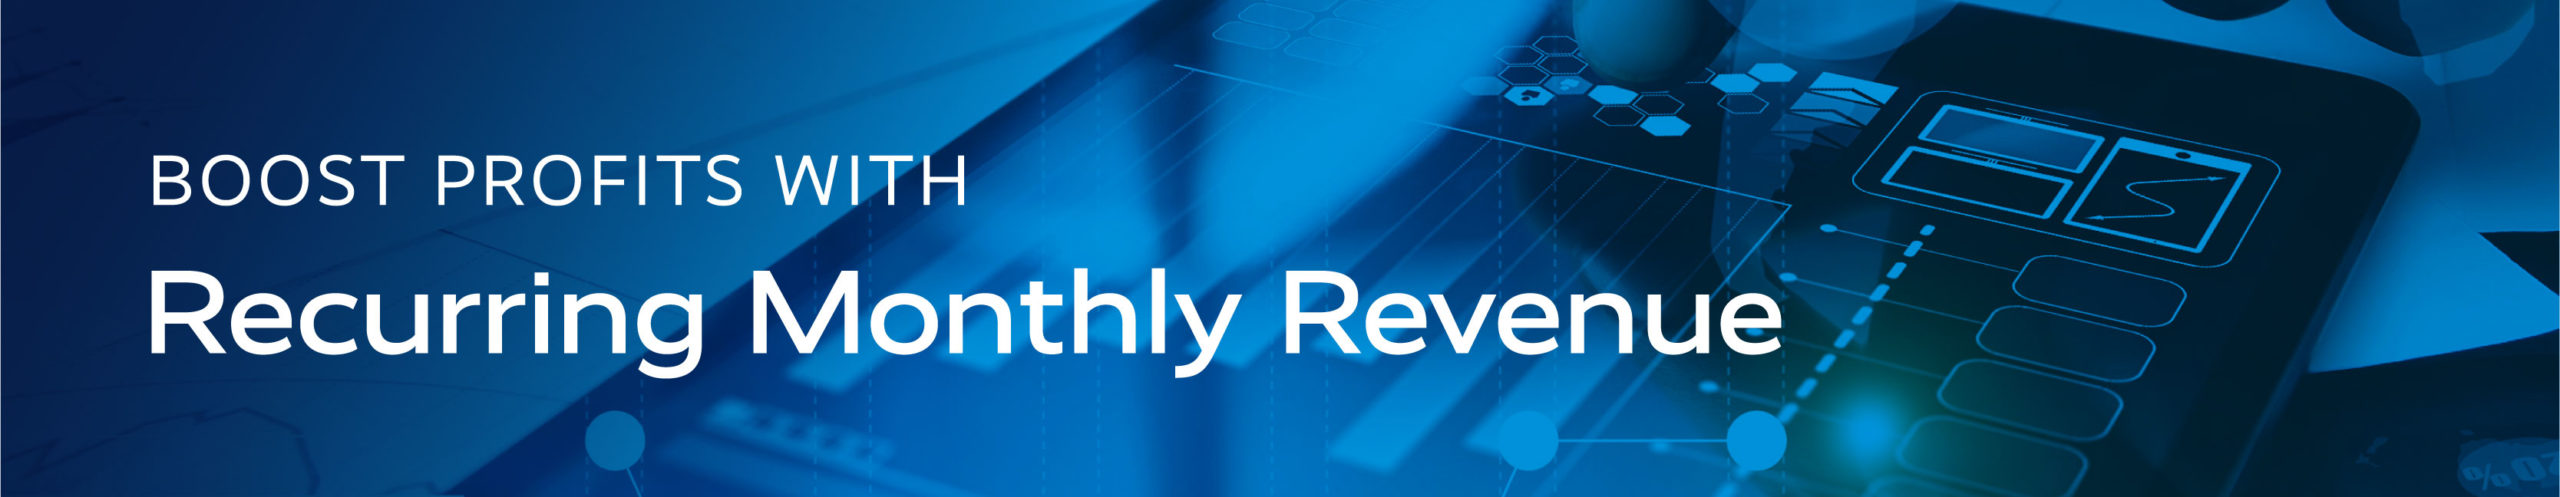 Recurring Monthly Revenue RMR Header